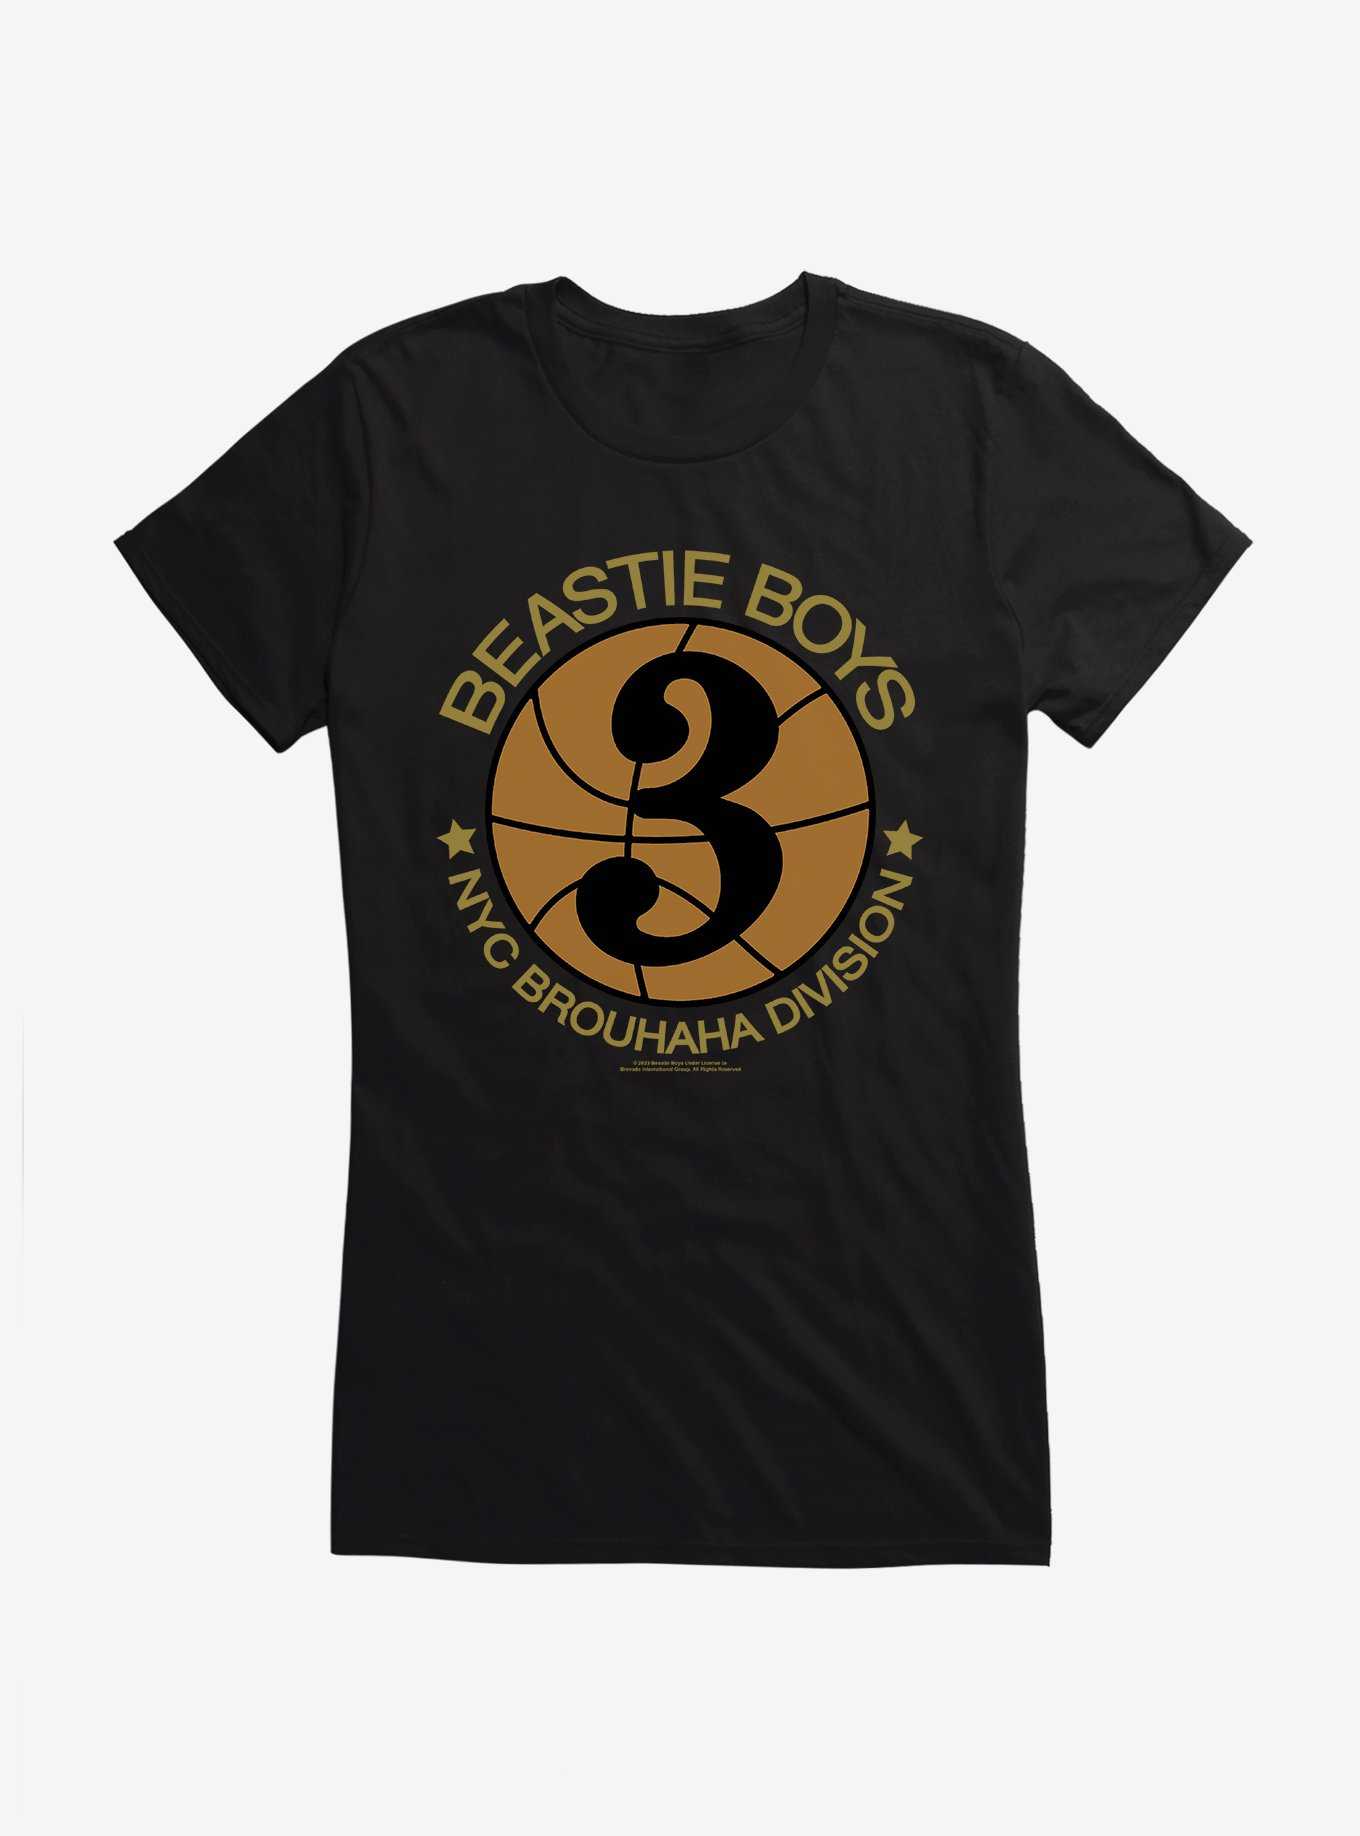 Beastie Boys NYC Brouhaha Division Girls T-Shirt, , hi-res